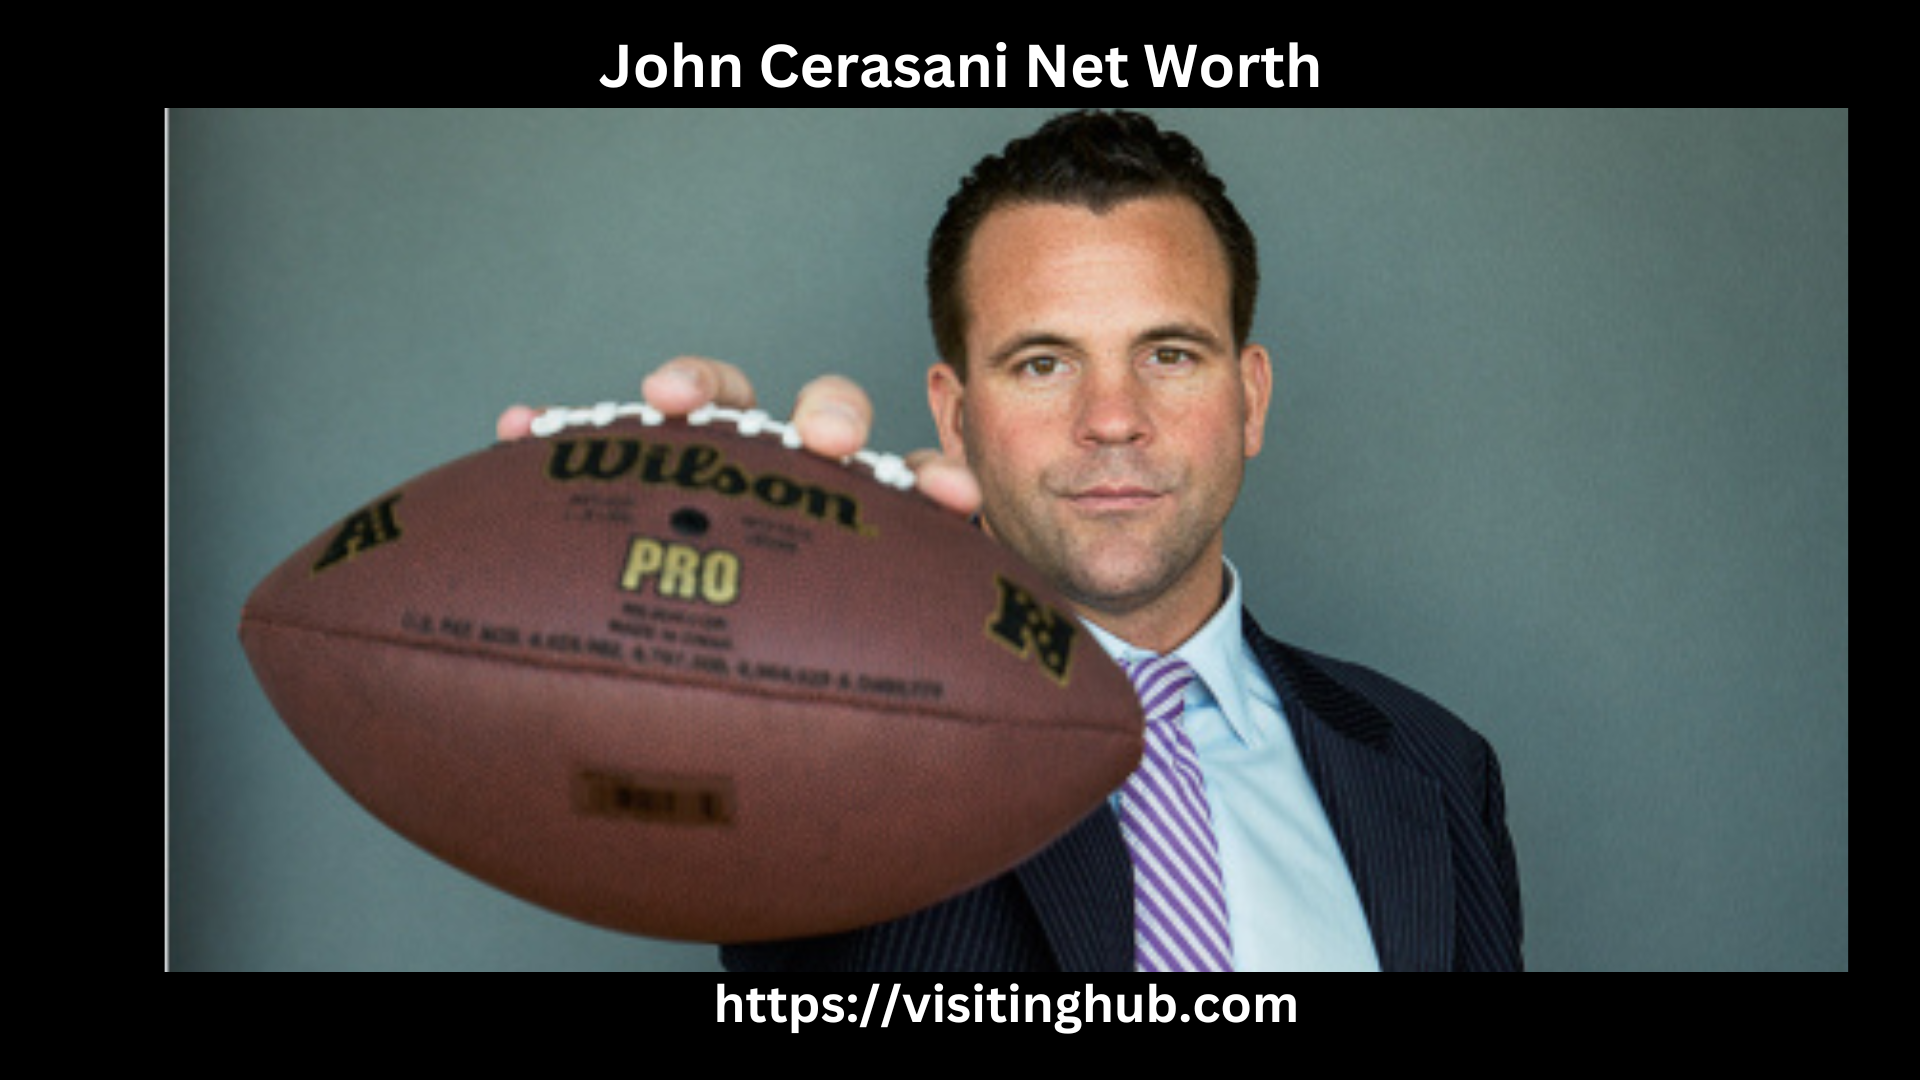 John Cerasani Net Worth